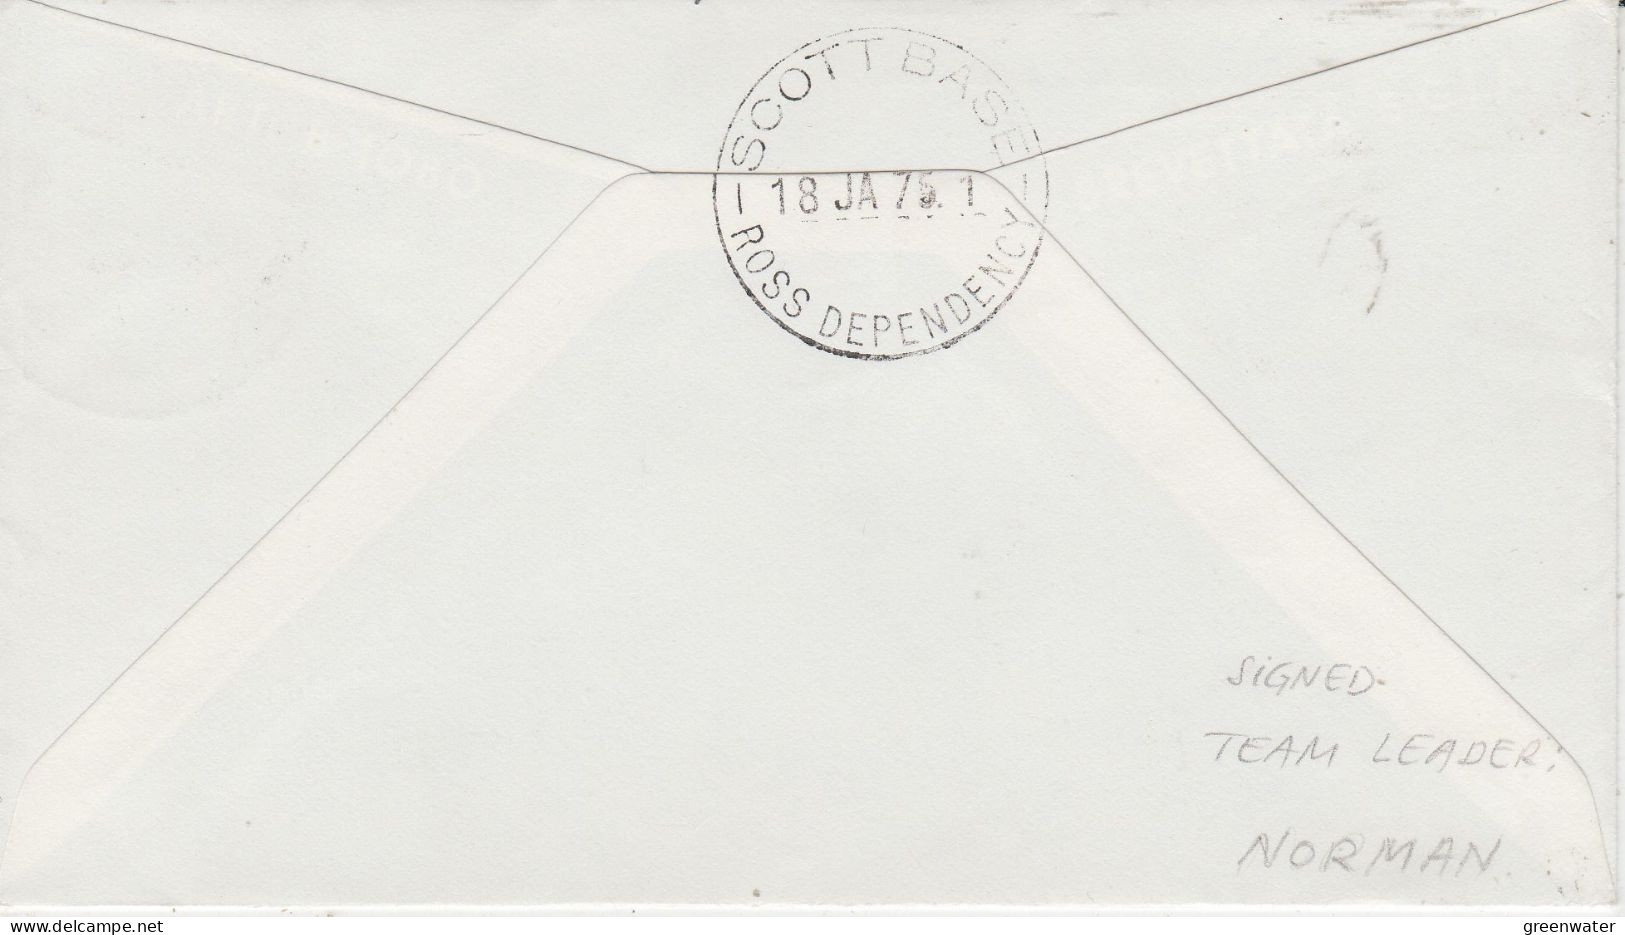 Ross Dependency  Mount Erebus International Party Signature Team Leader Norman Ca Scott Base 18 JA 1975 (ZO238) - Basi Scientifiche